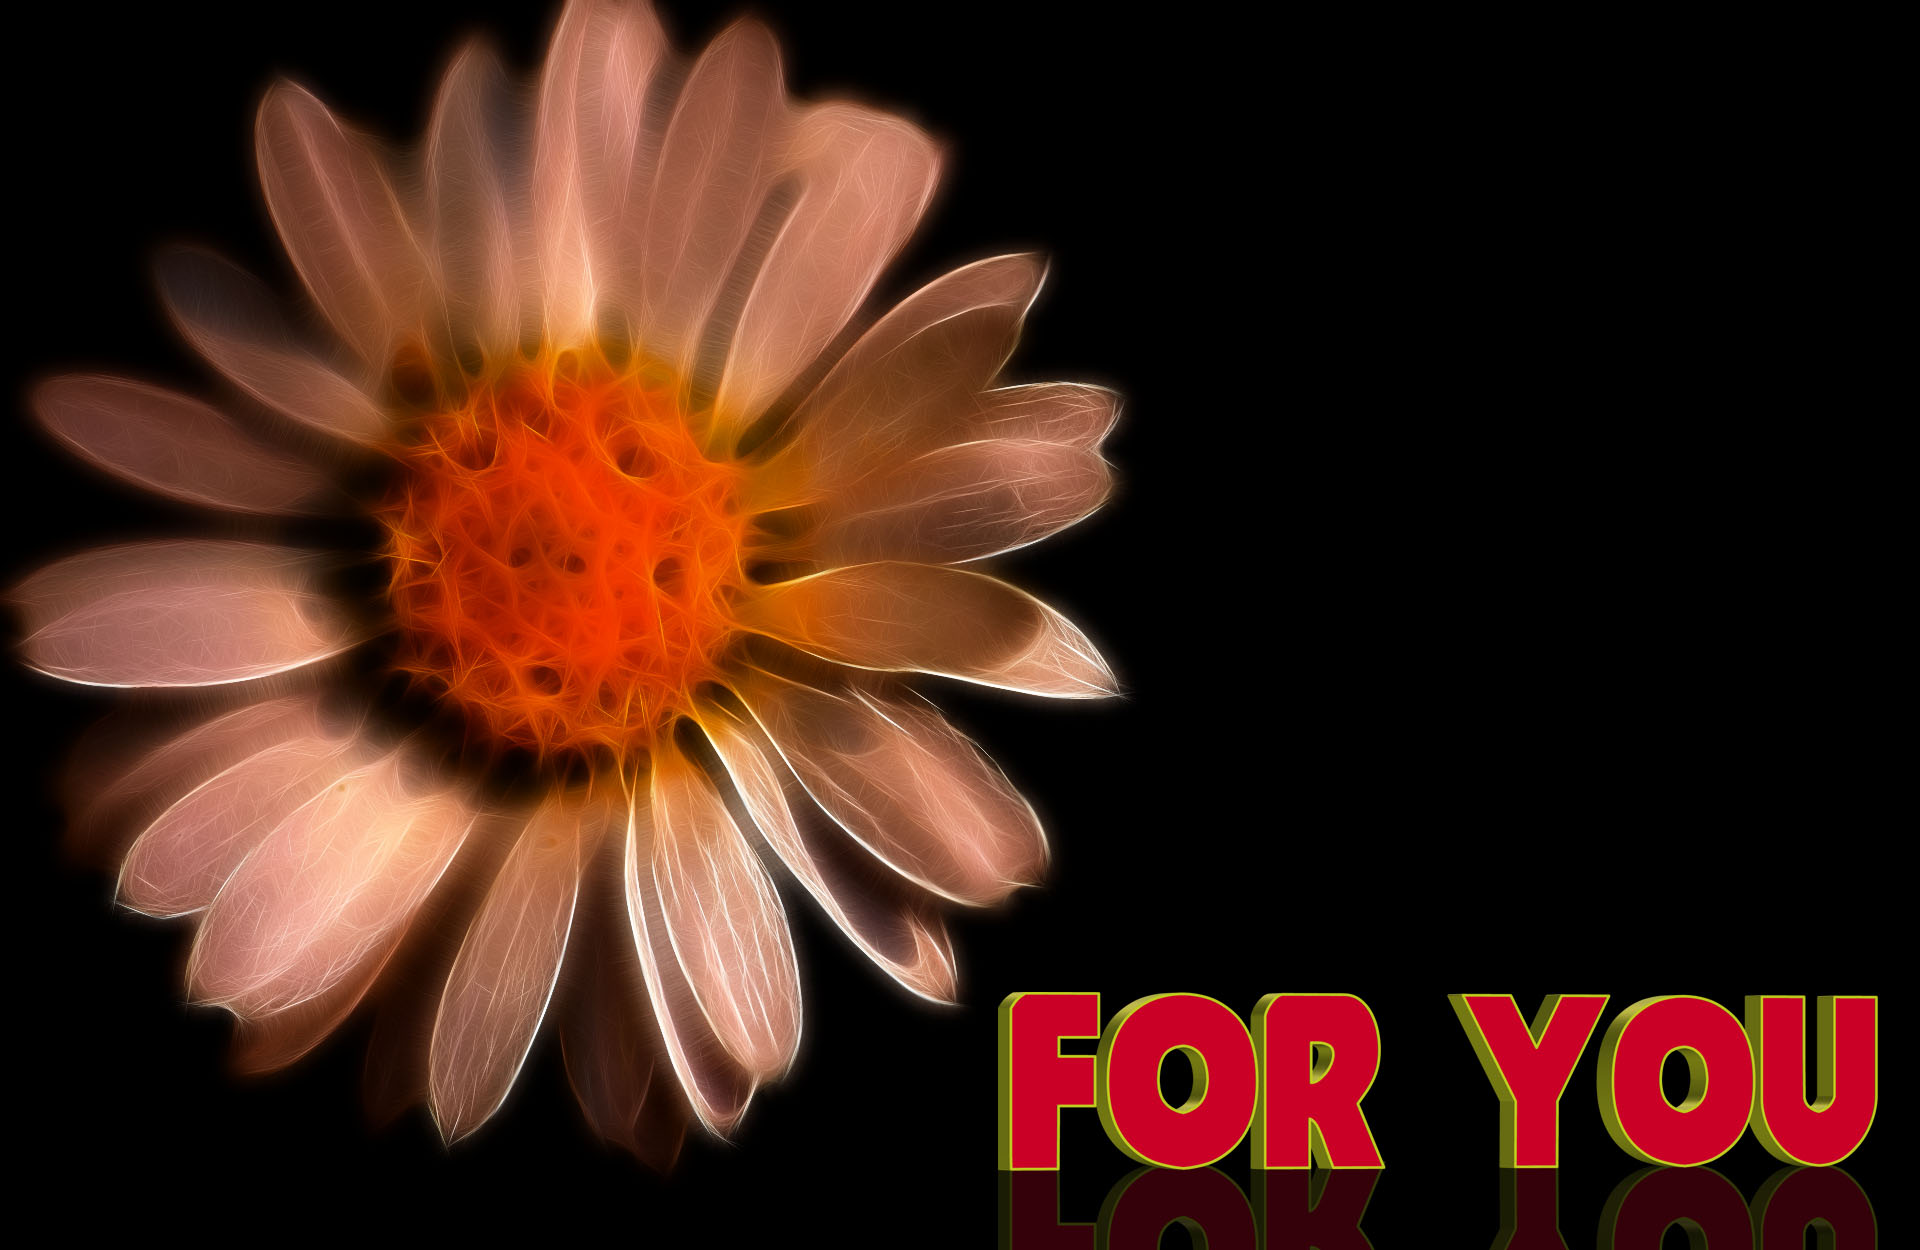 A flower for you by Susanlu4esm